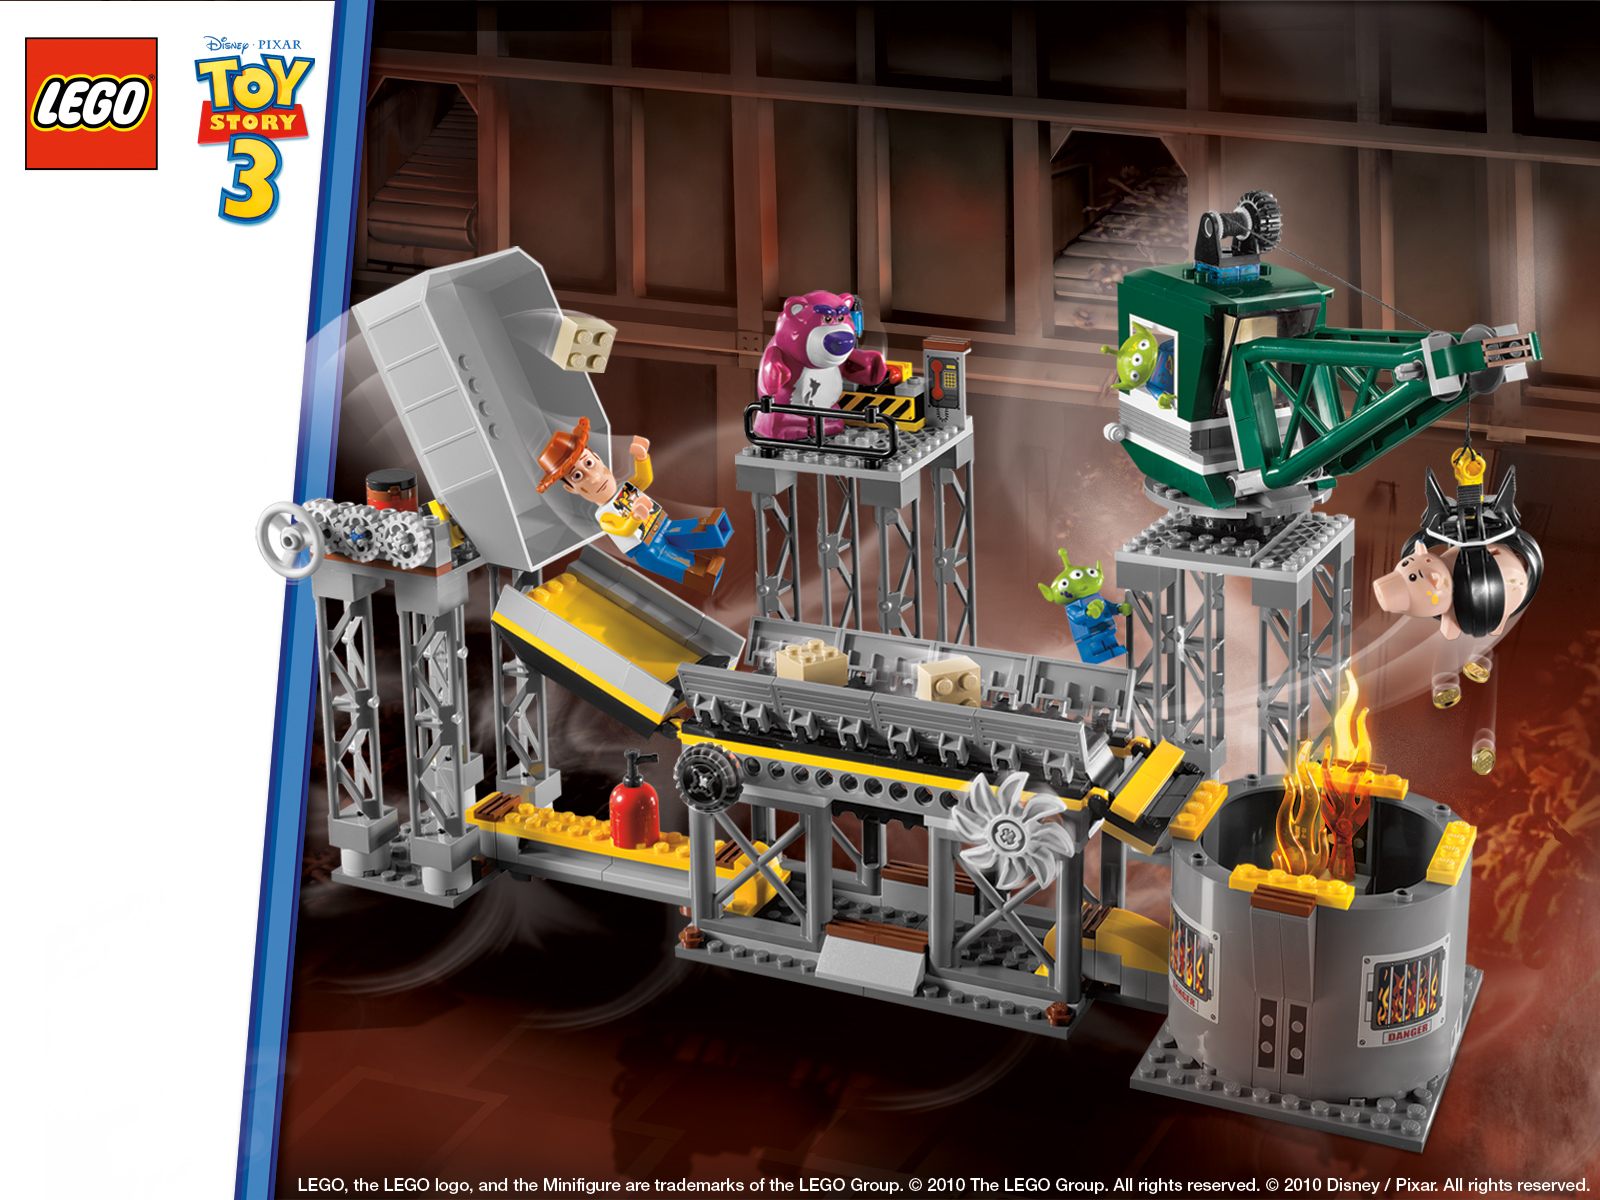 lego toy story 3 sets